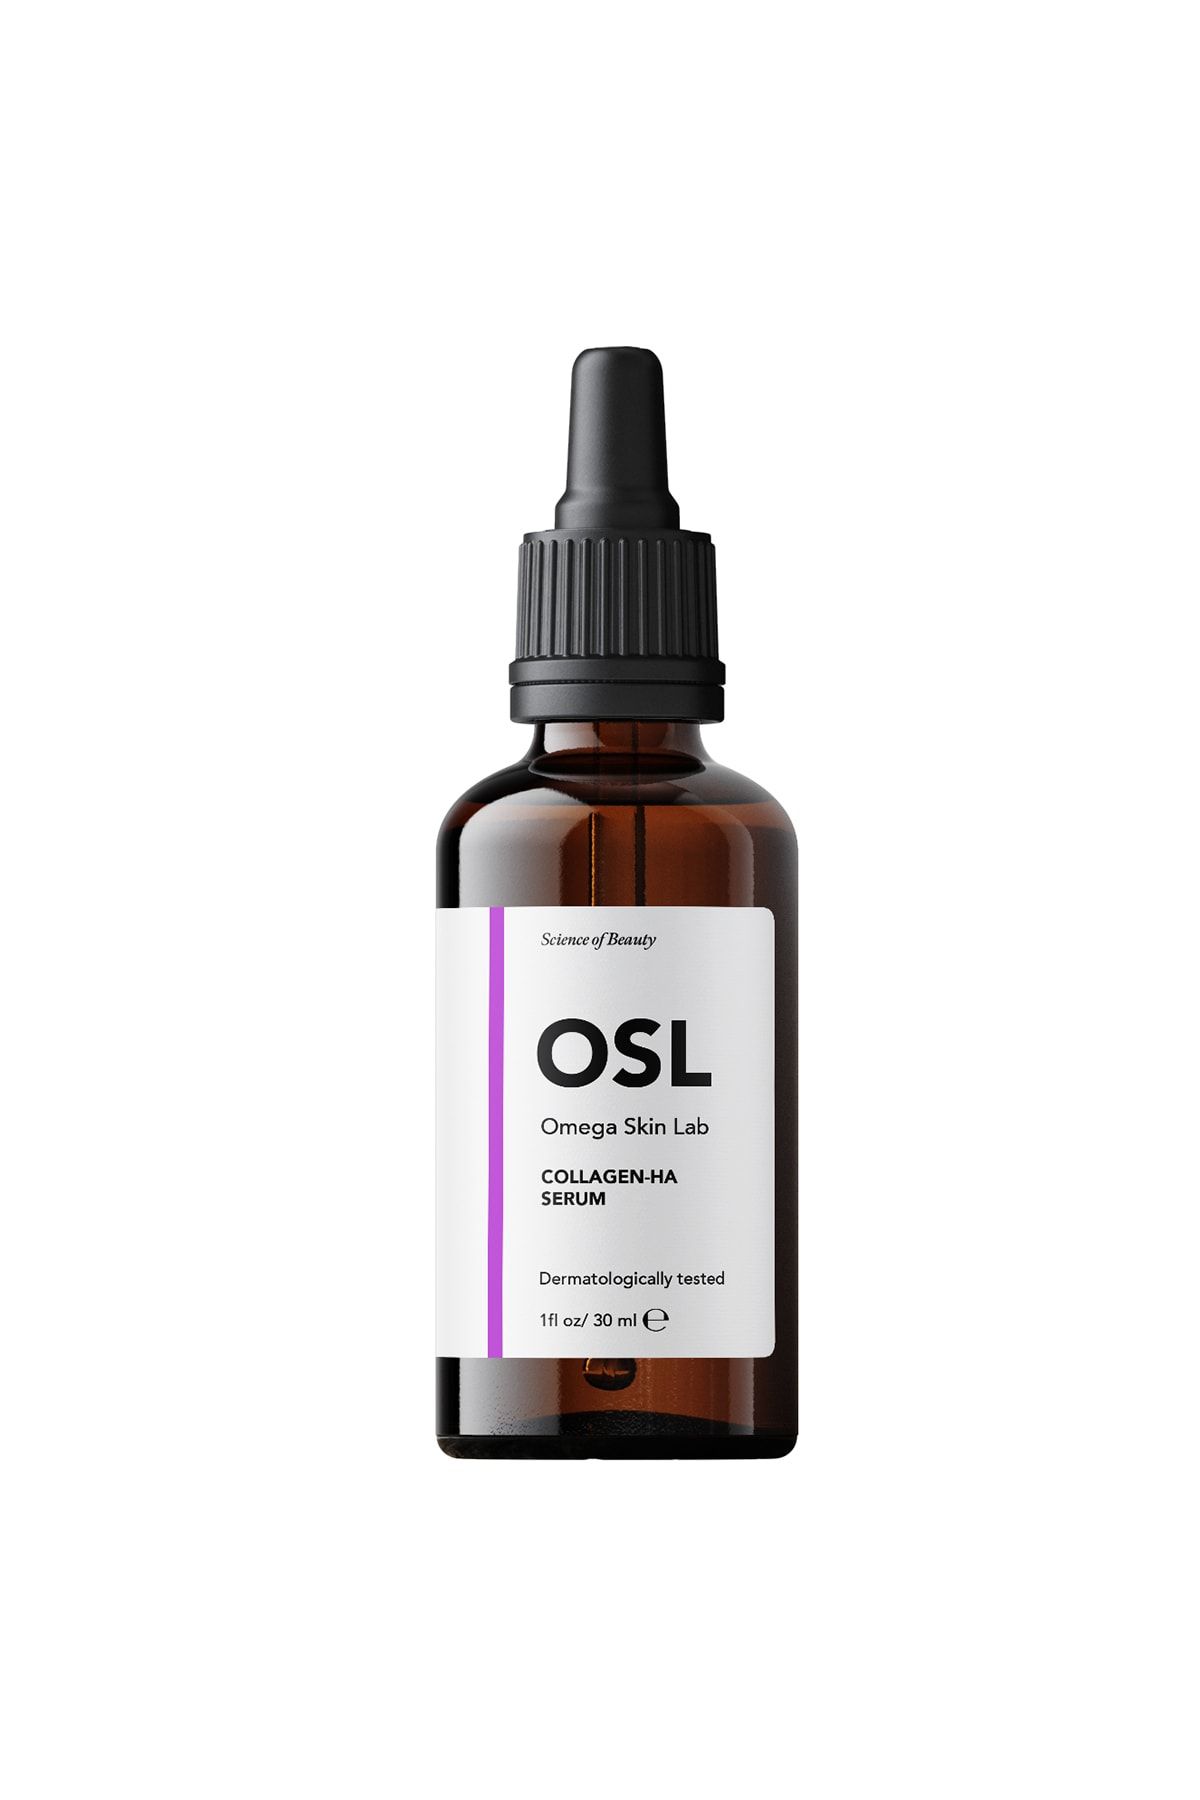 OSL Omega Skin Lab Collagen-ha Serum 30ml